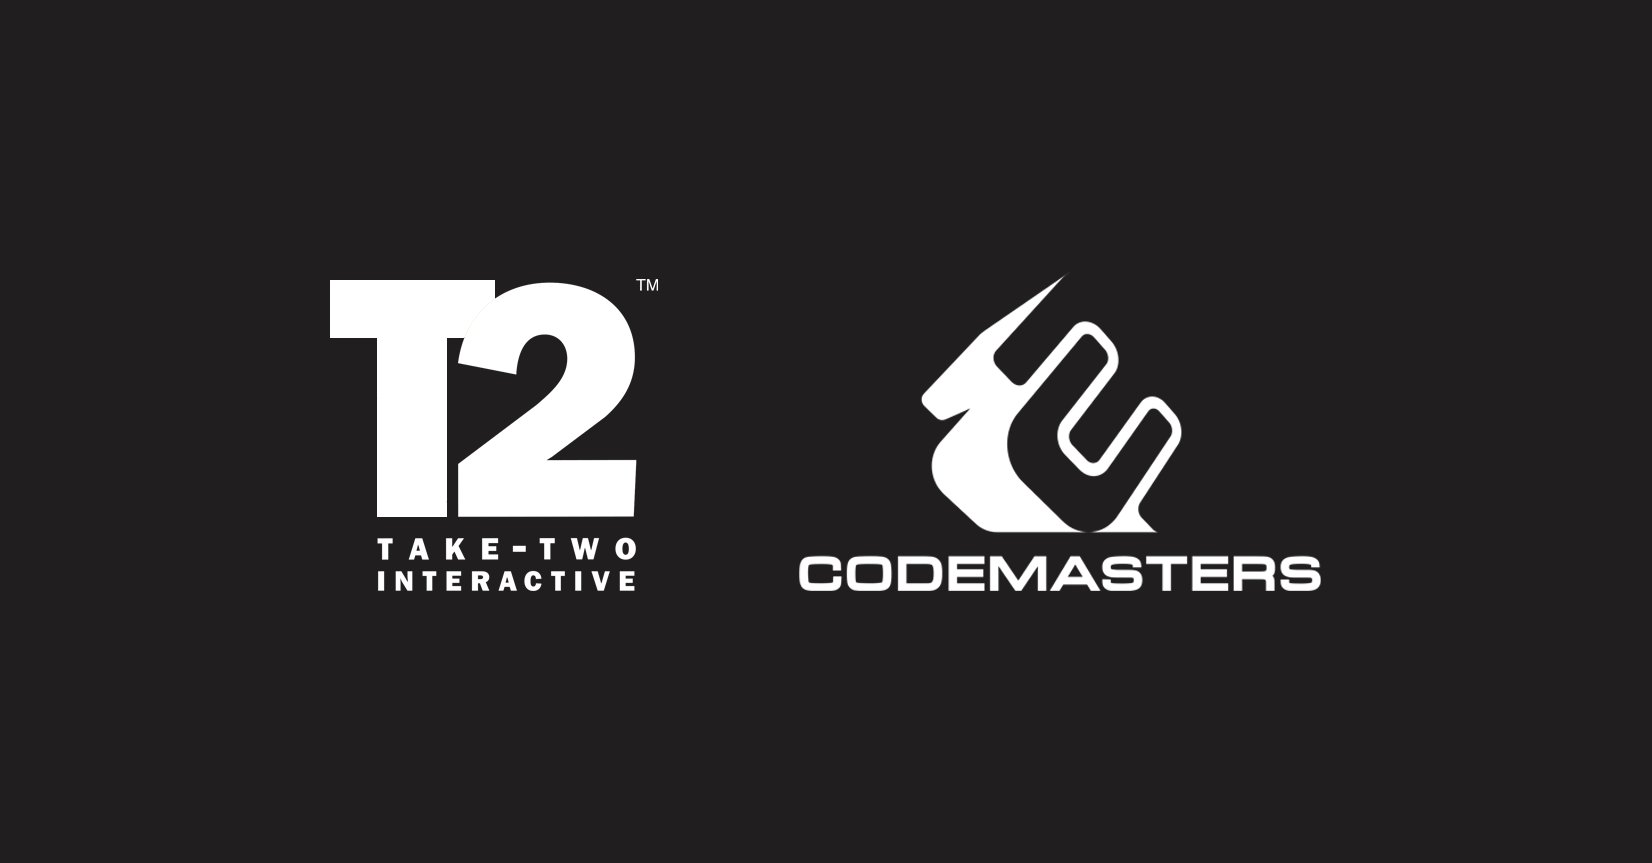 Take-Two Interactive เข้าซื้อ Codemasters พร้อมกับข้อตกลงที่เสร็จสมบูรณ์ในปี 2021: นี่หมายถึงชื่อที่ดีกว่าจากทั้งสอง บริษัท หรือไม่?